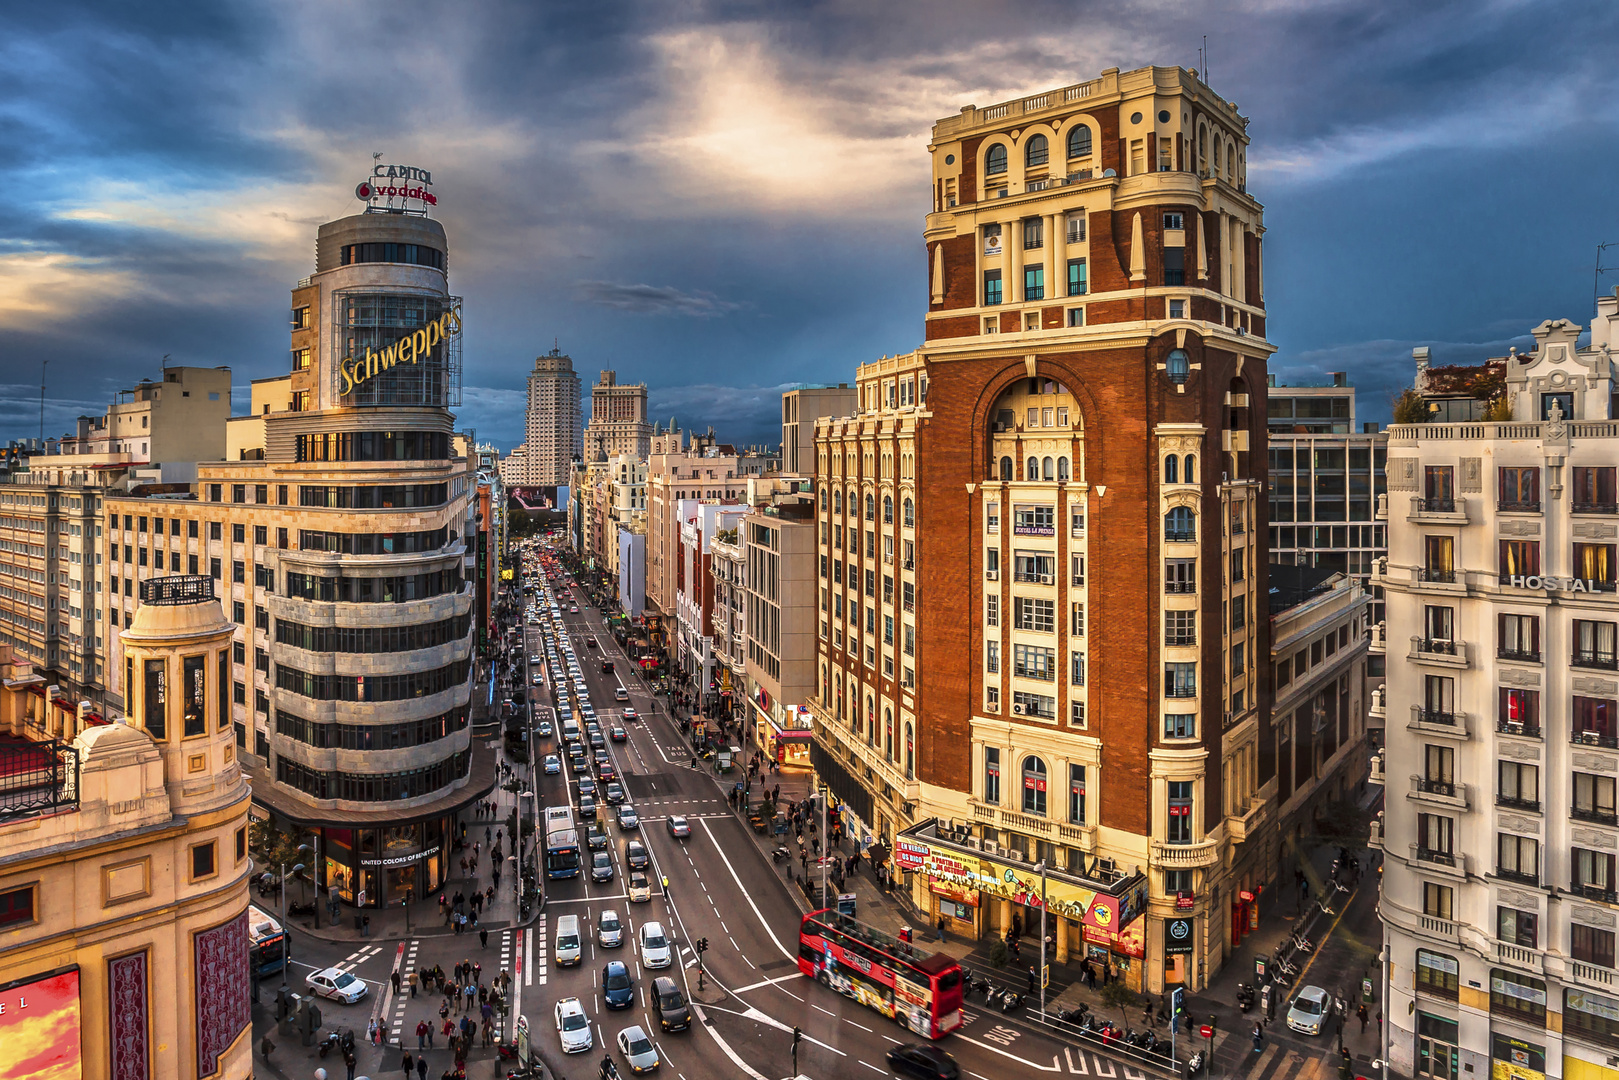 Madrid "Gran Vía"